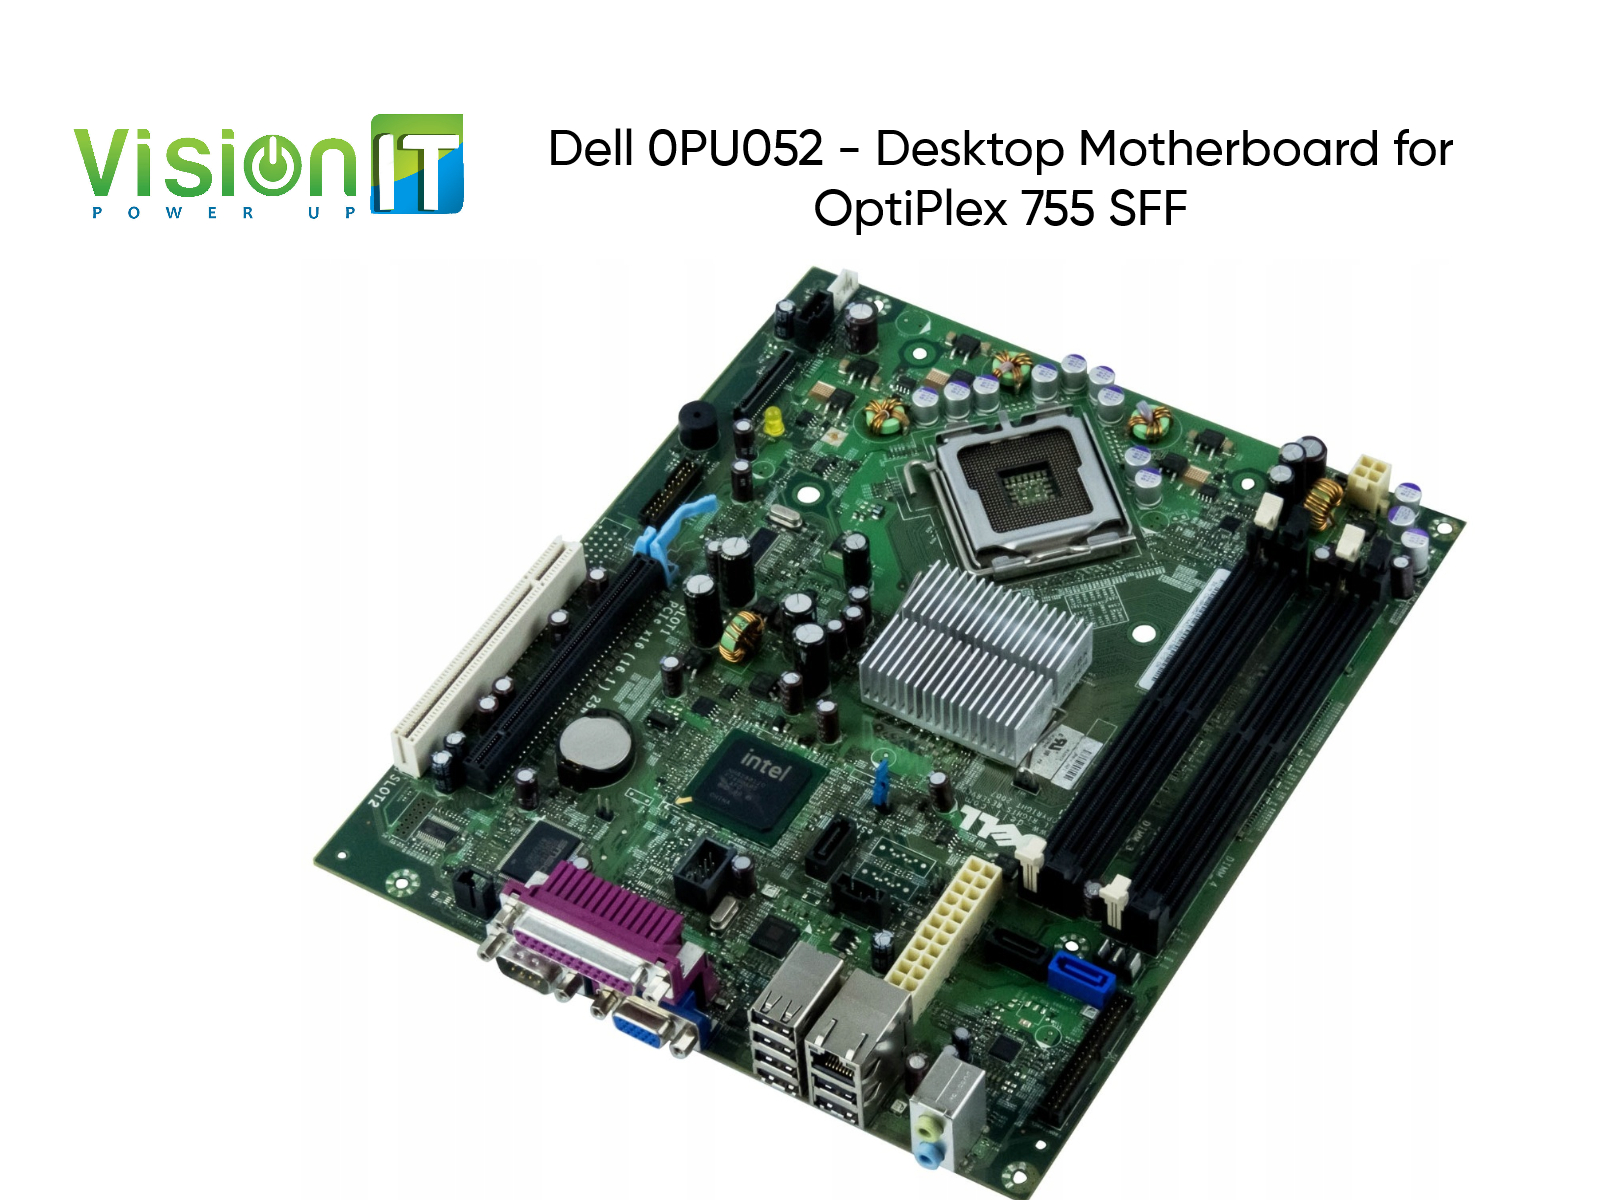 Dell 0PU052 - Desktop Motherboard